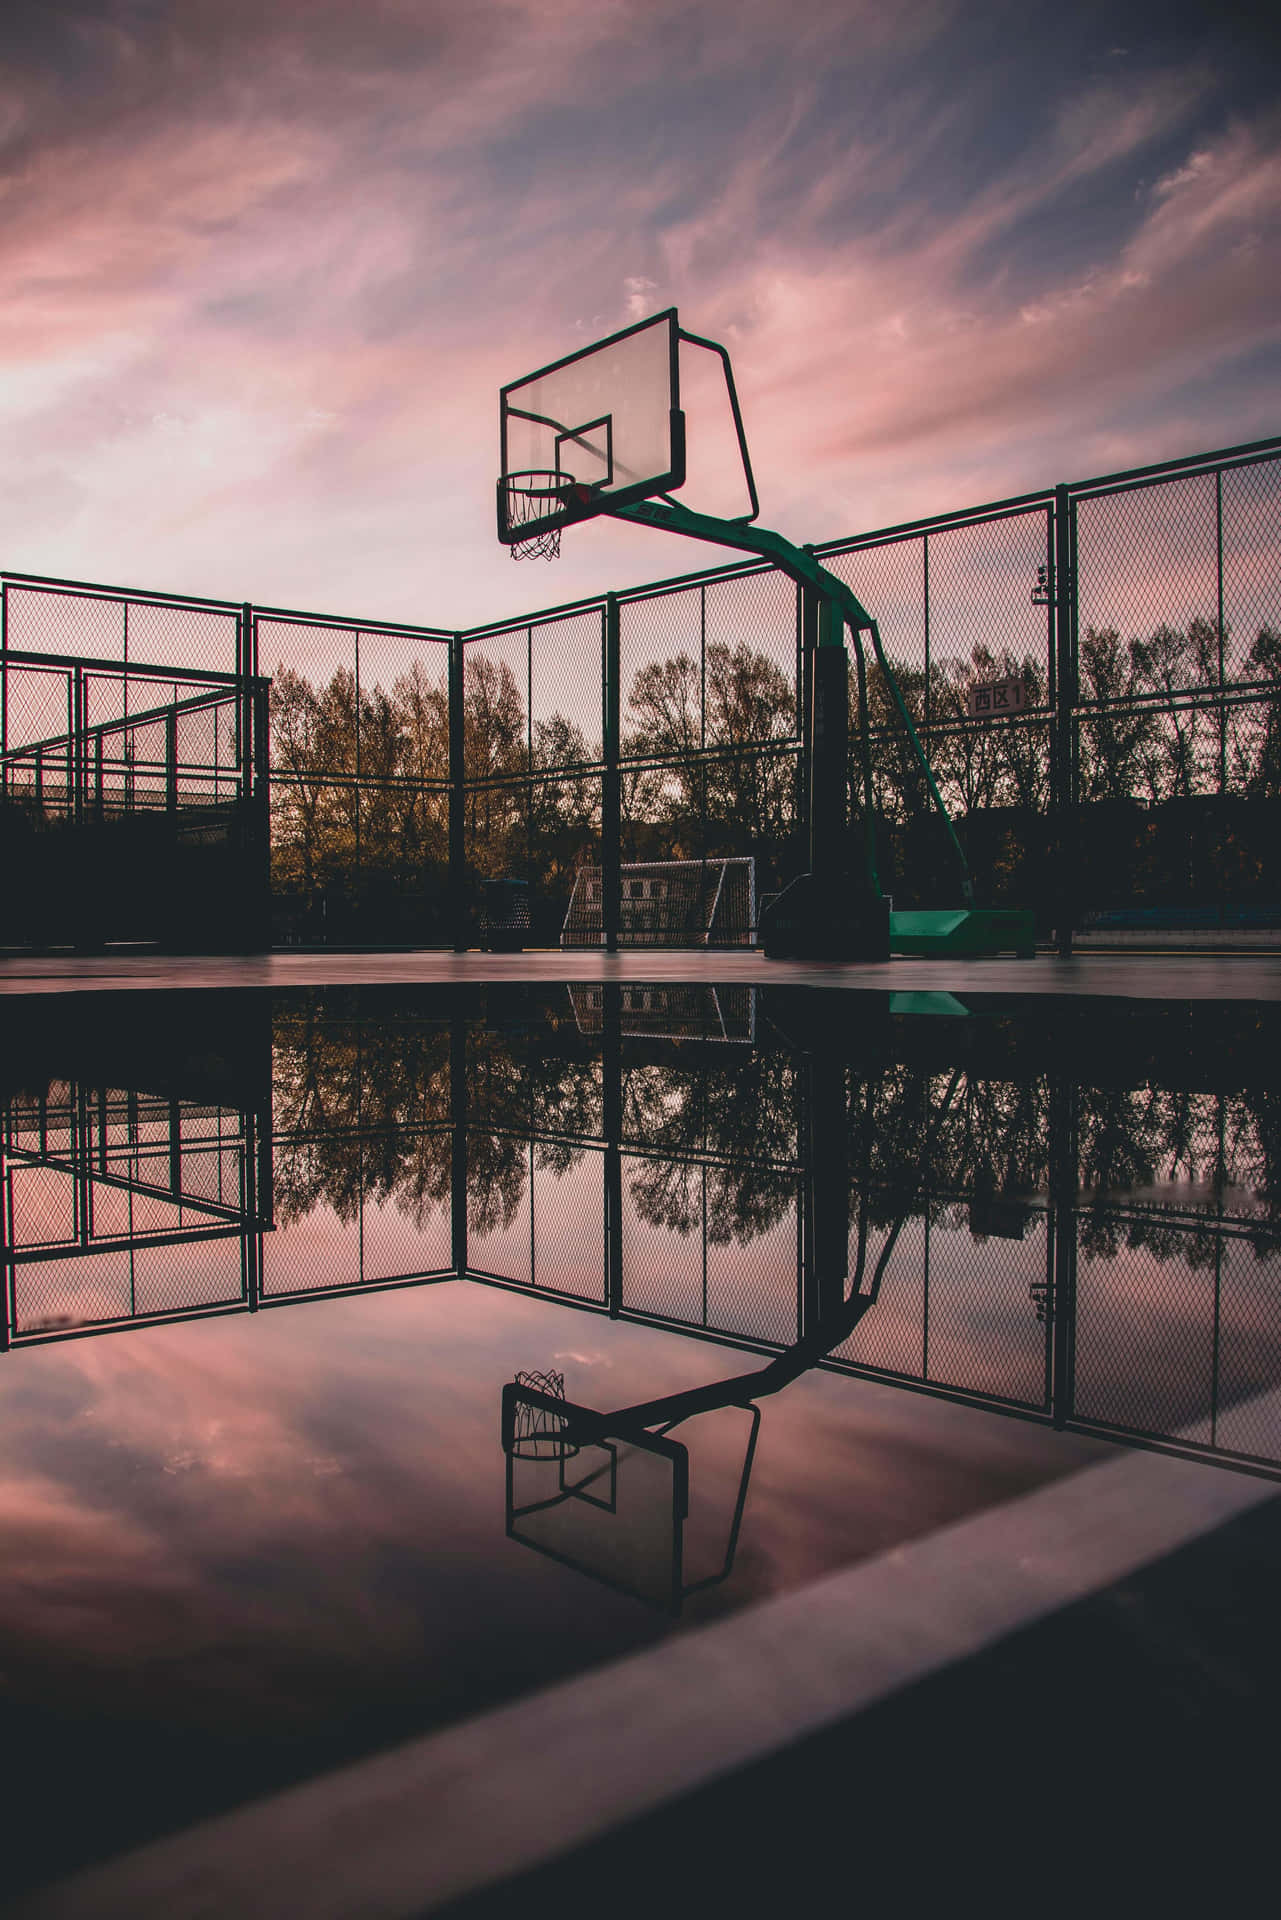 Twilight Basketball Court Reflection Wallpaper